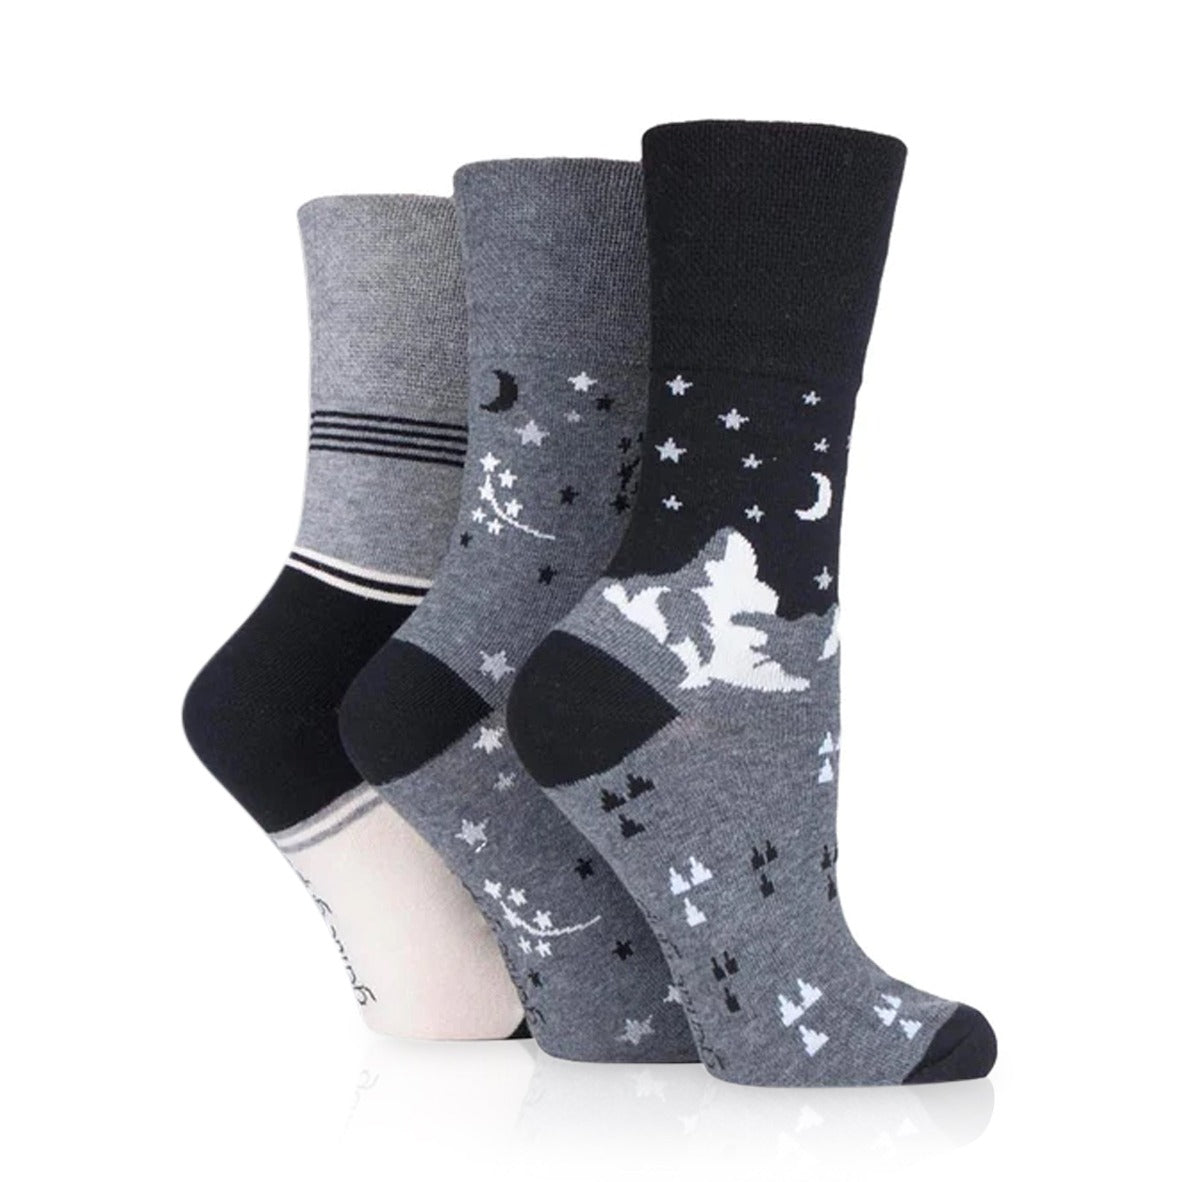 non binding socks for women in moon and stars